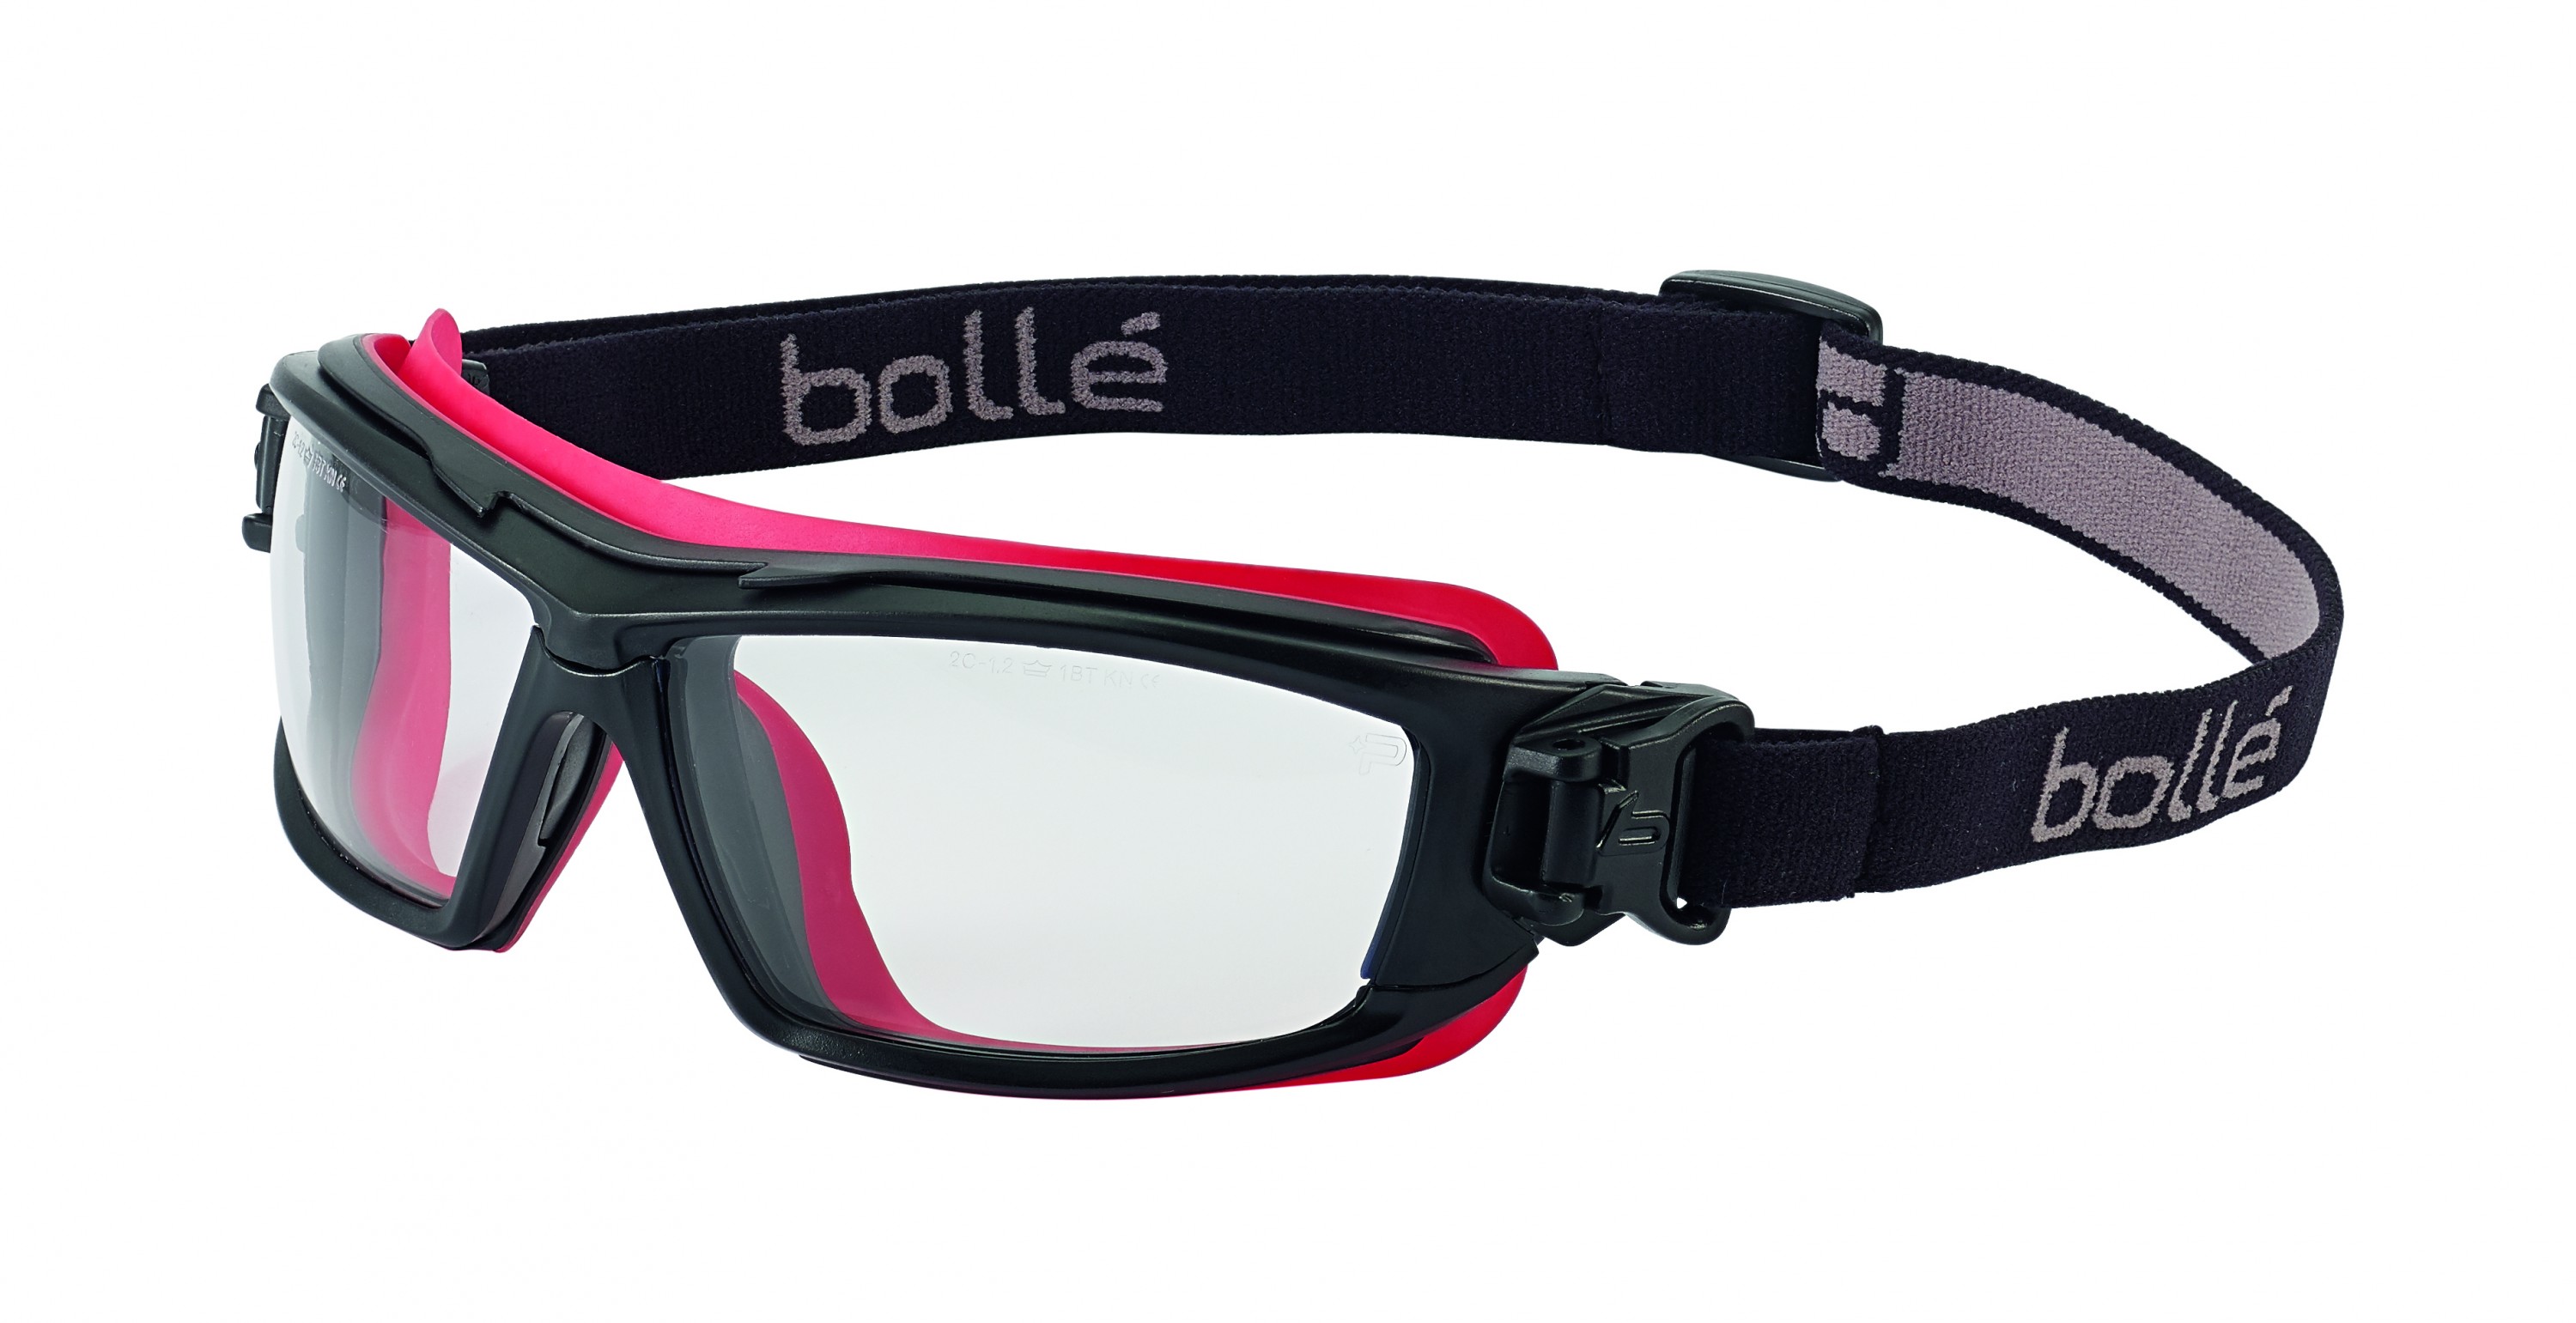 Очки bolle. Защитные очки Bolle. Очки защитные Rush+ RUSHPPSI. Очки Bolle ultim8 New ULTIPSI. Очки Bolle® Glasses Protective Rush+ BSSI Smoke.